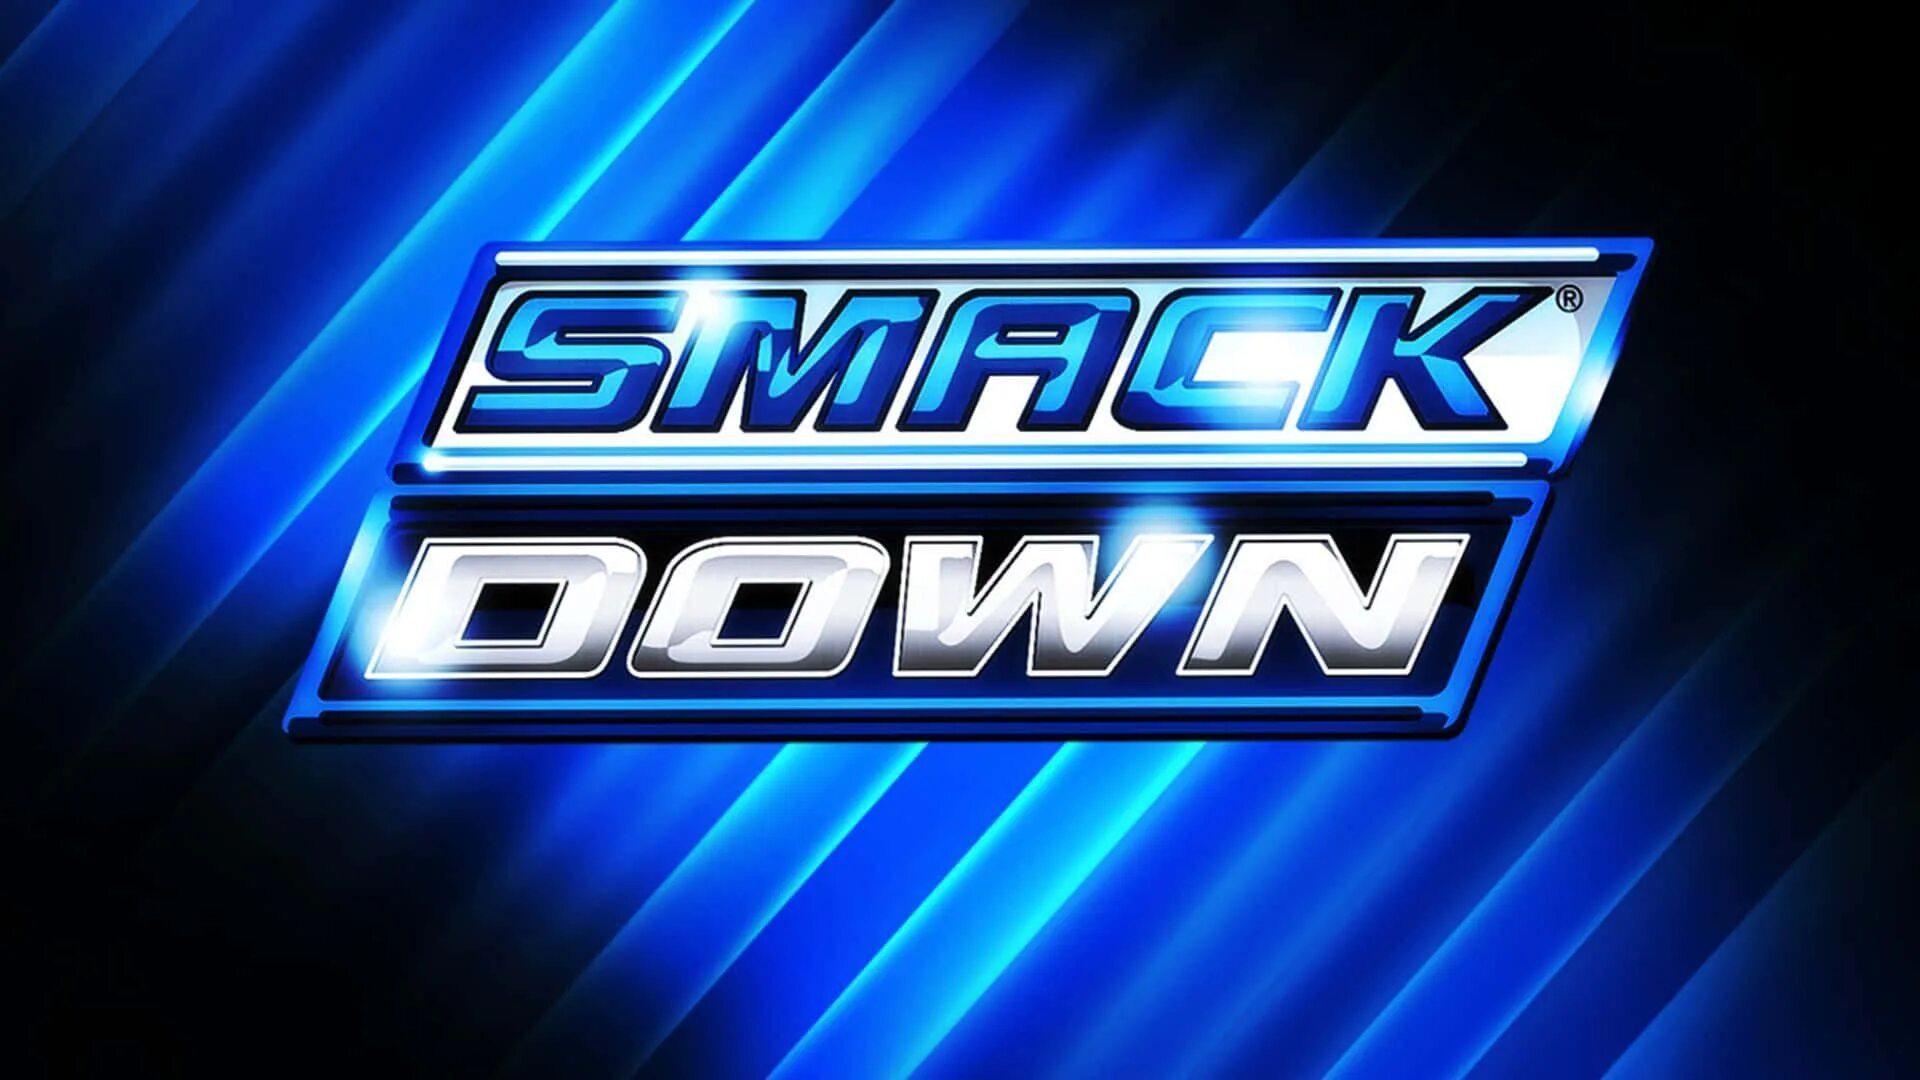 Реслинг WWE SMACKDOWN. Рестлер WWE SMACKDOWN. WWE SMACKDOWN logo. WWE SMACKDOWN Live.